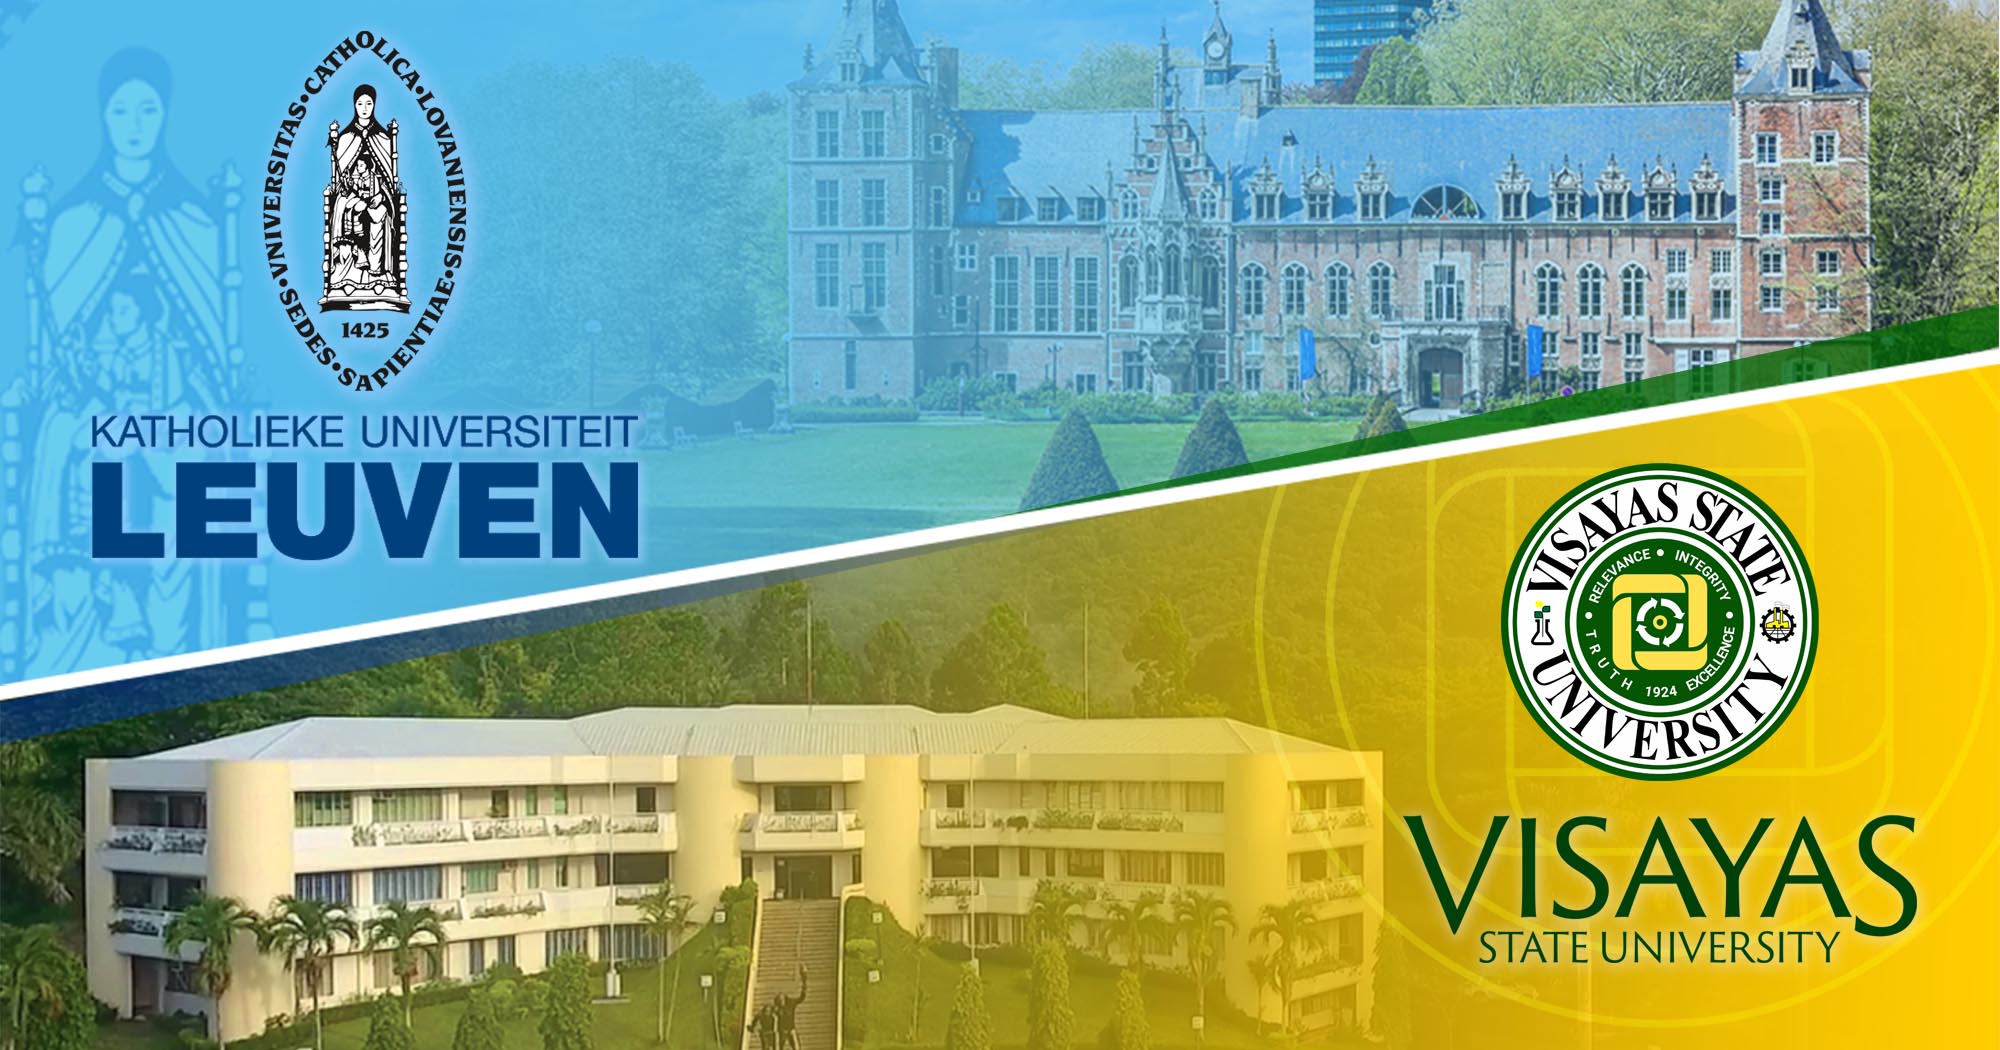 Katholieke Universiteit Leuven and VSU